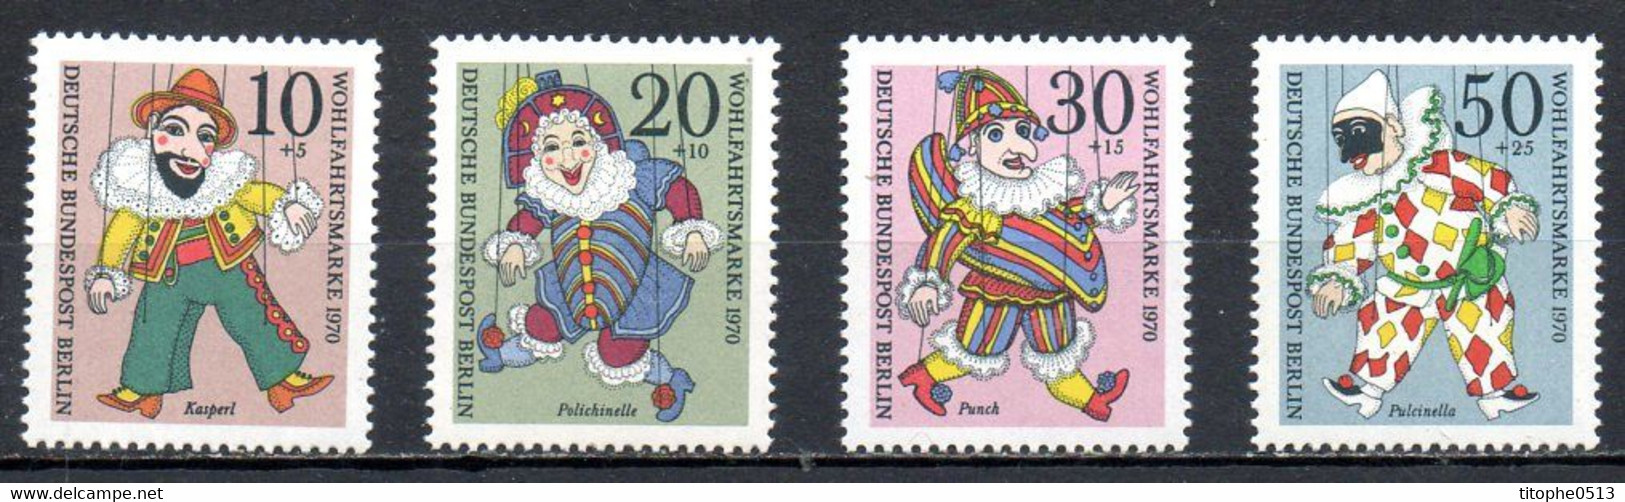 ALLEMAGNE BERLIN. N°335-8 De 1970. Marionnettes. - Puppets